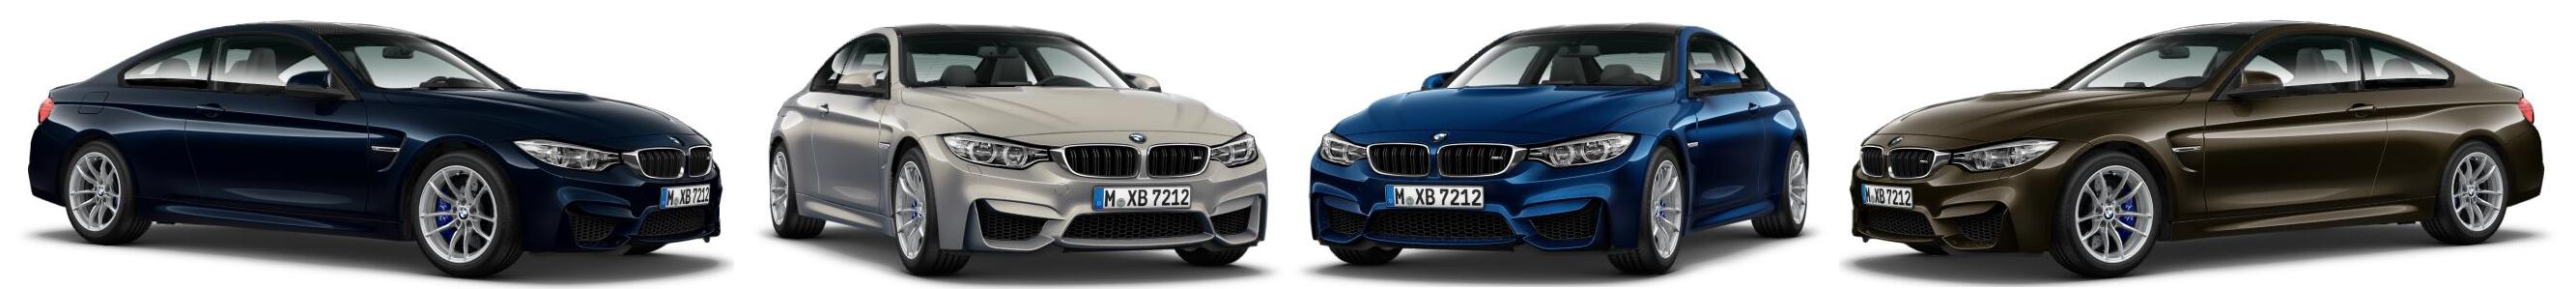 BMW M4 individiual colors 2014.JPG